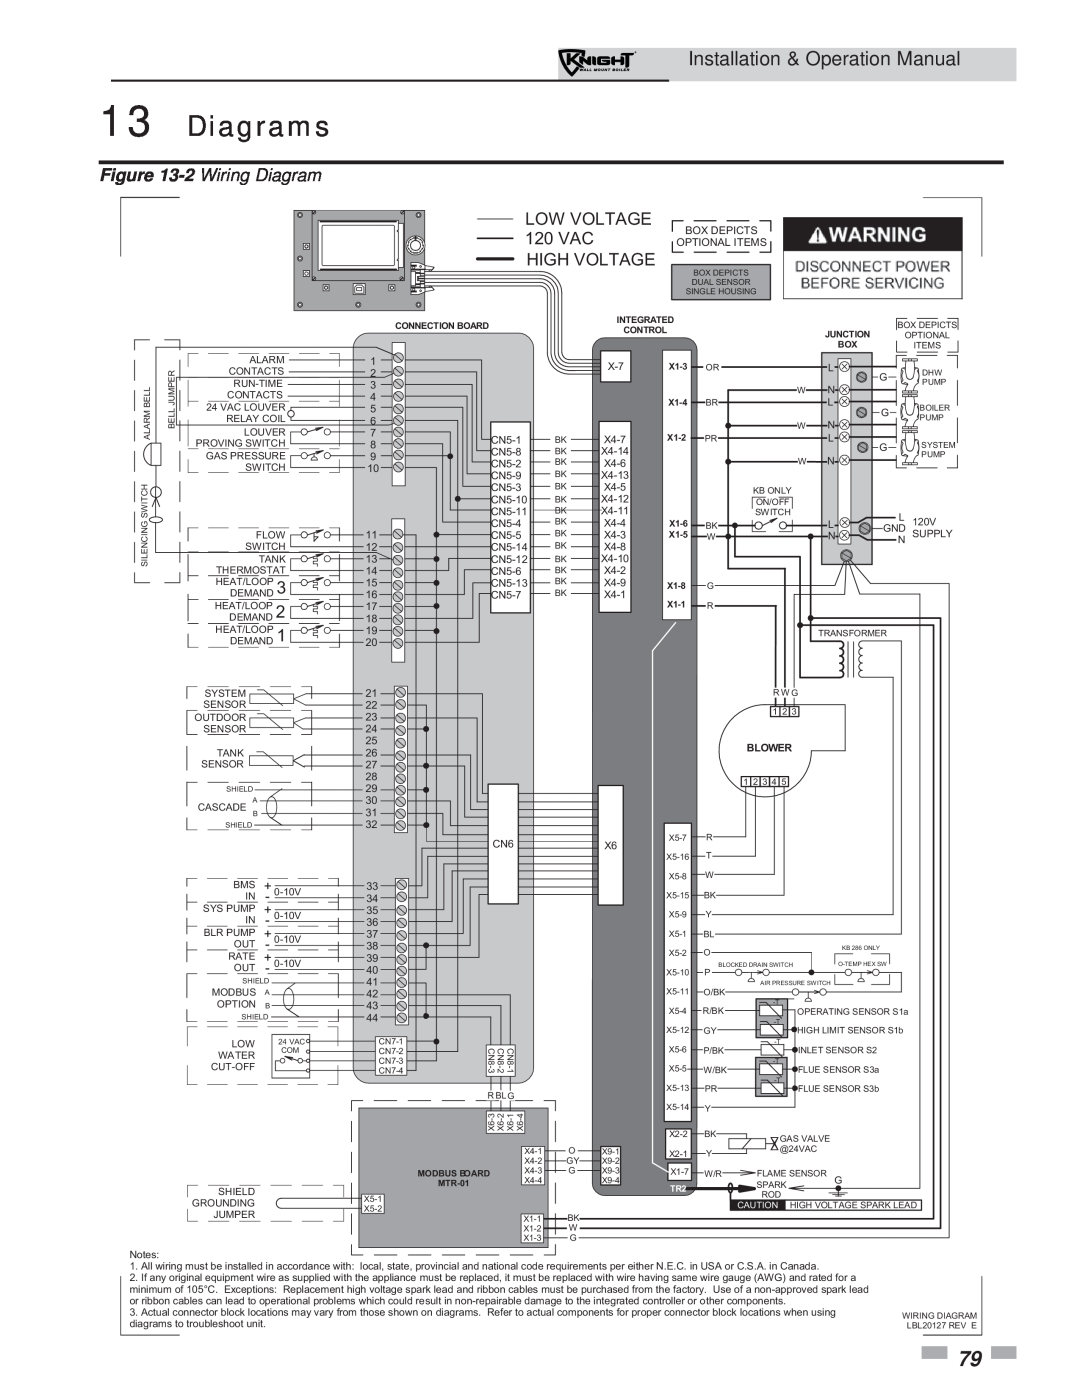 Lochinvar 51-211 2 Wiring Diagram, Diagrams, Installation & Operation Manual, Low Voltage, 120 VAC, High Voltage, Blower 